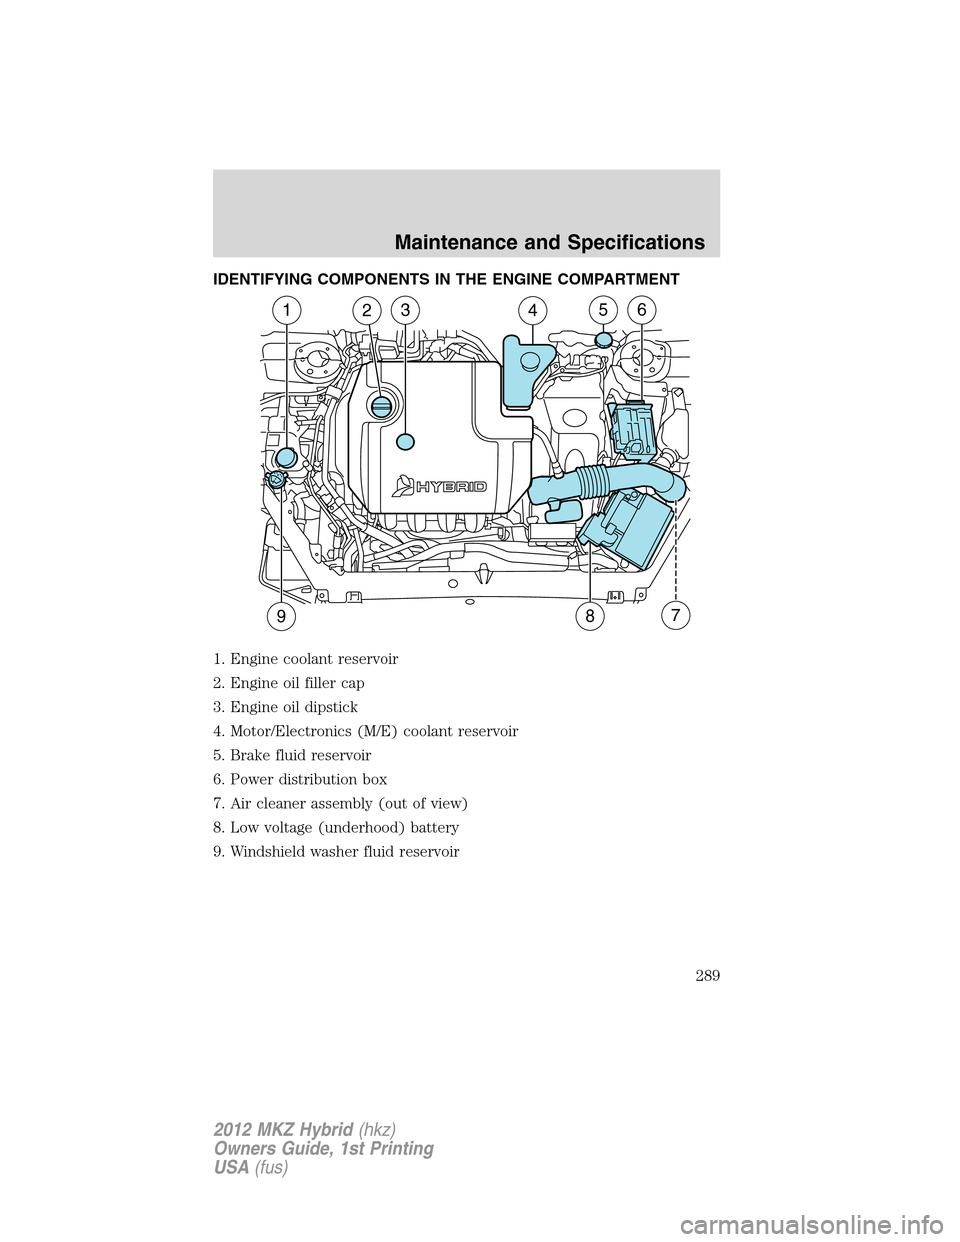 LINCOLN MKZ HYBRID 2012  Owners Manual IDENTIFYING COMPONENTS IN THE ENGINE COMPARTMENT
1. Engine coolant reservoir
2. Engine oil filler cap
3. Engine oil dipstick
4. Motor/Electronics (M/E) coolant reservoir
5. Brake fluid reservoir
6. Po